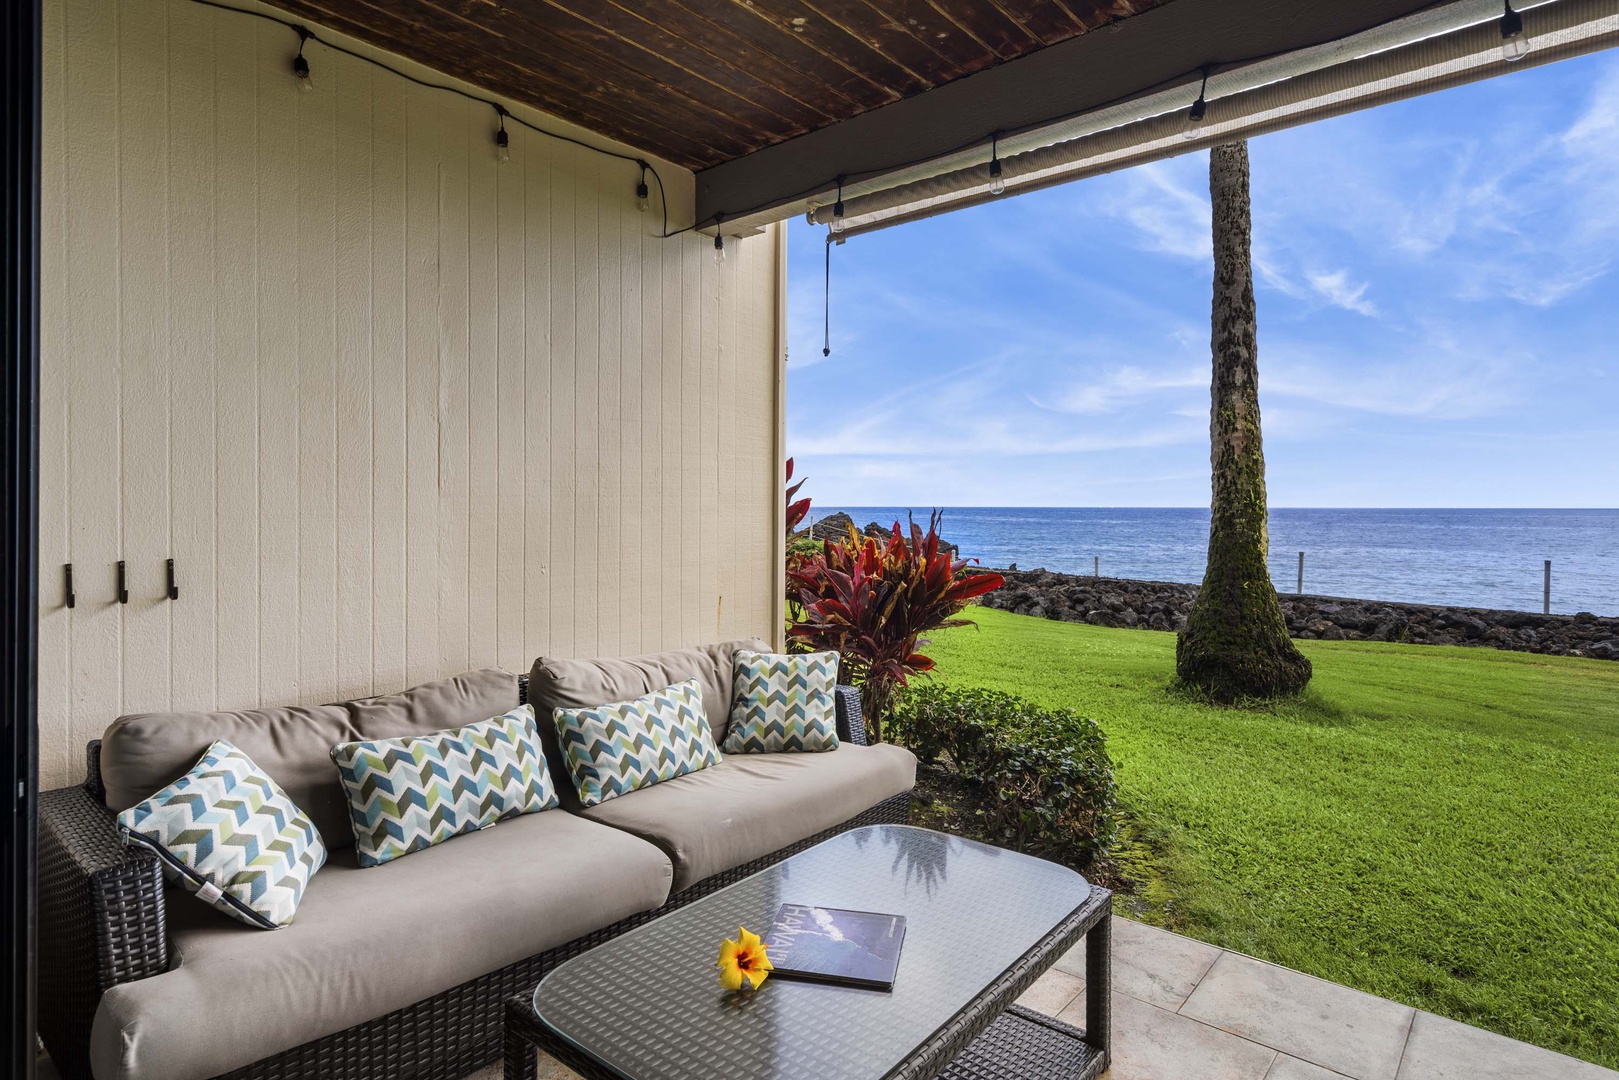 Kailua Kona Vacation Rentals, Keauhou Kona Surf & Racquet 2101 - The lanai area has a couch and a table on the left side